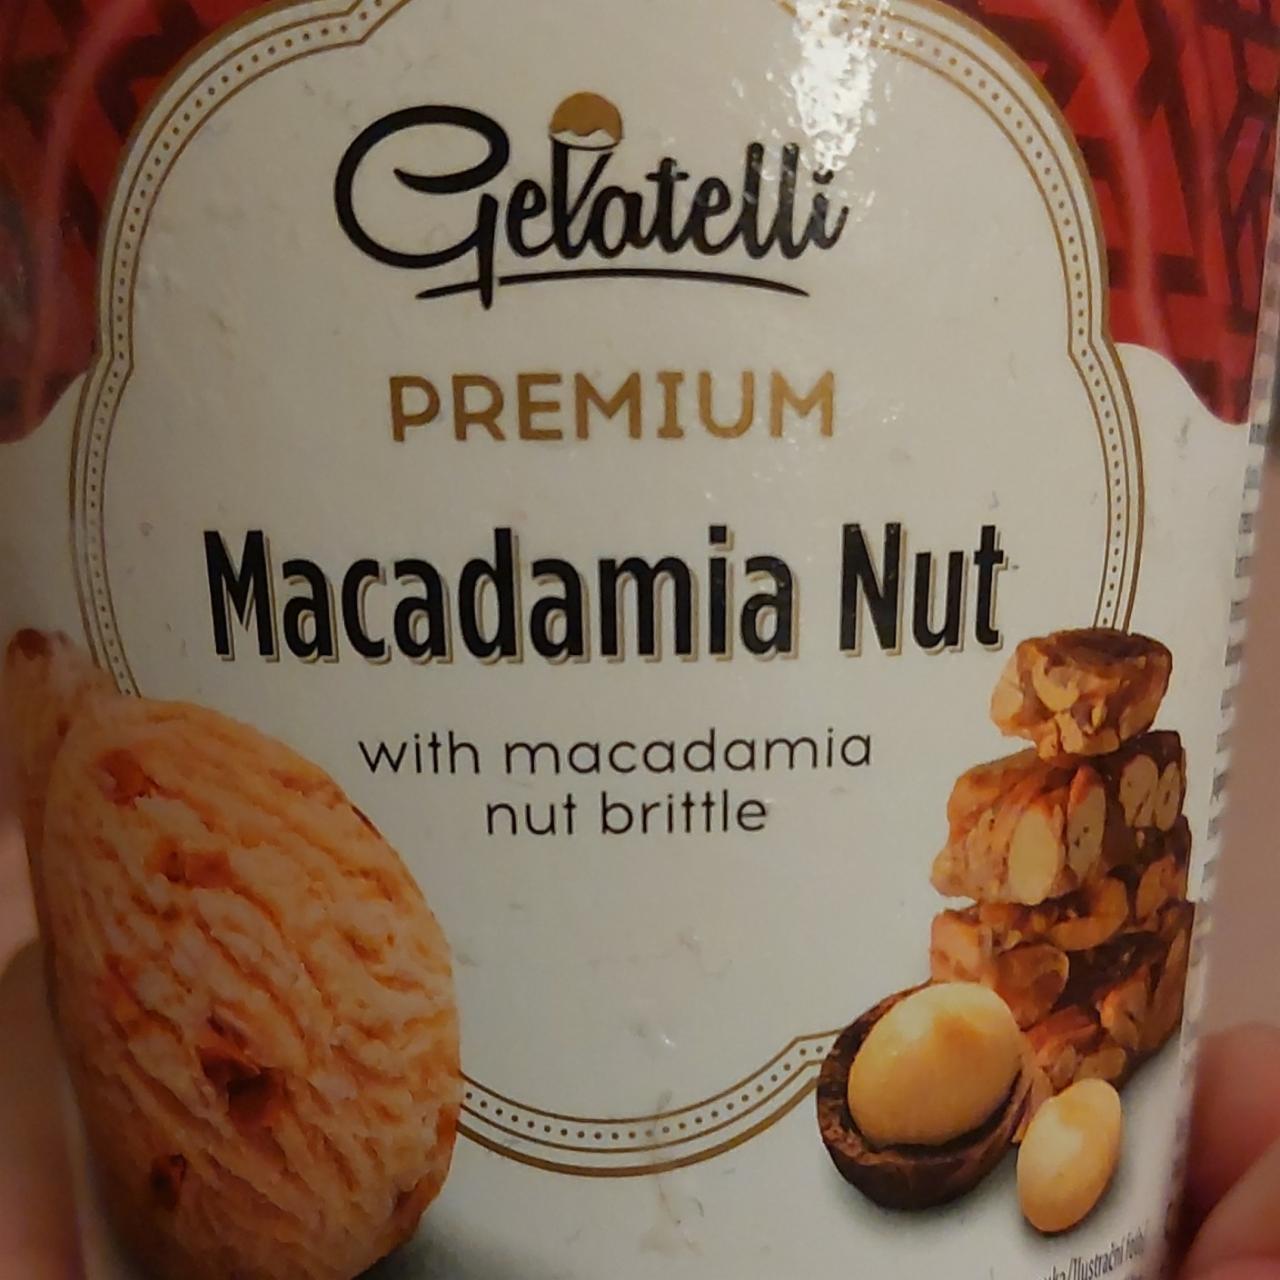 Фото - Мороженное Macadamia Nut Gelatelli